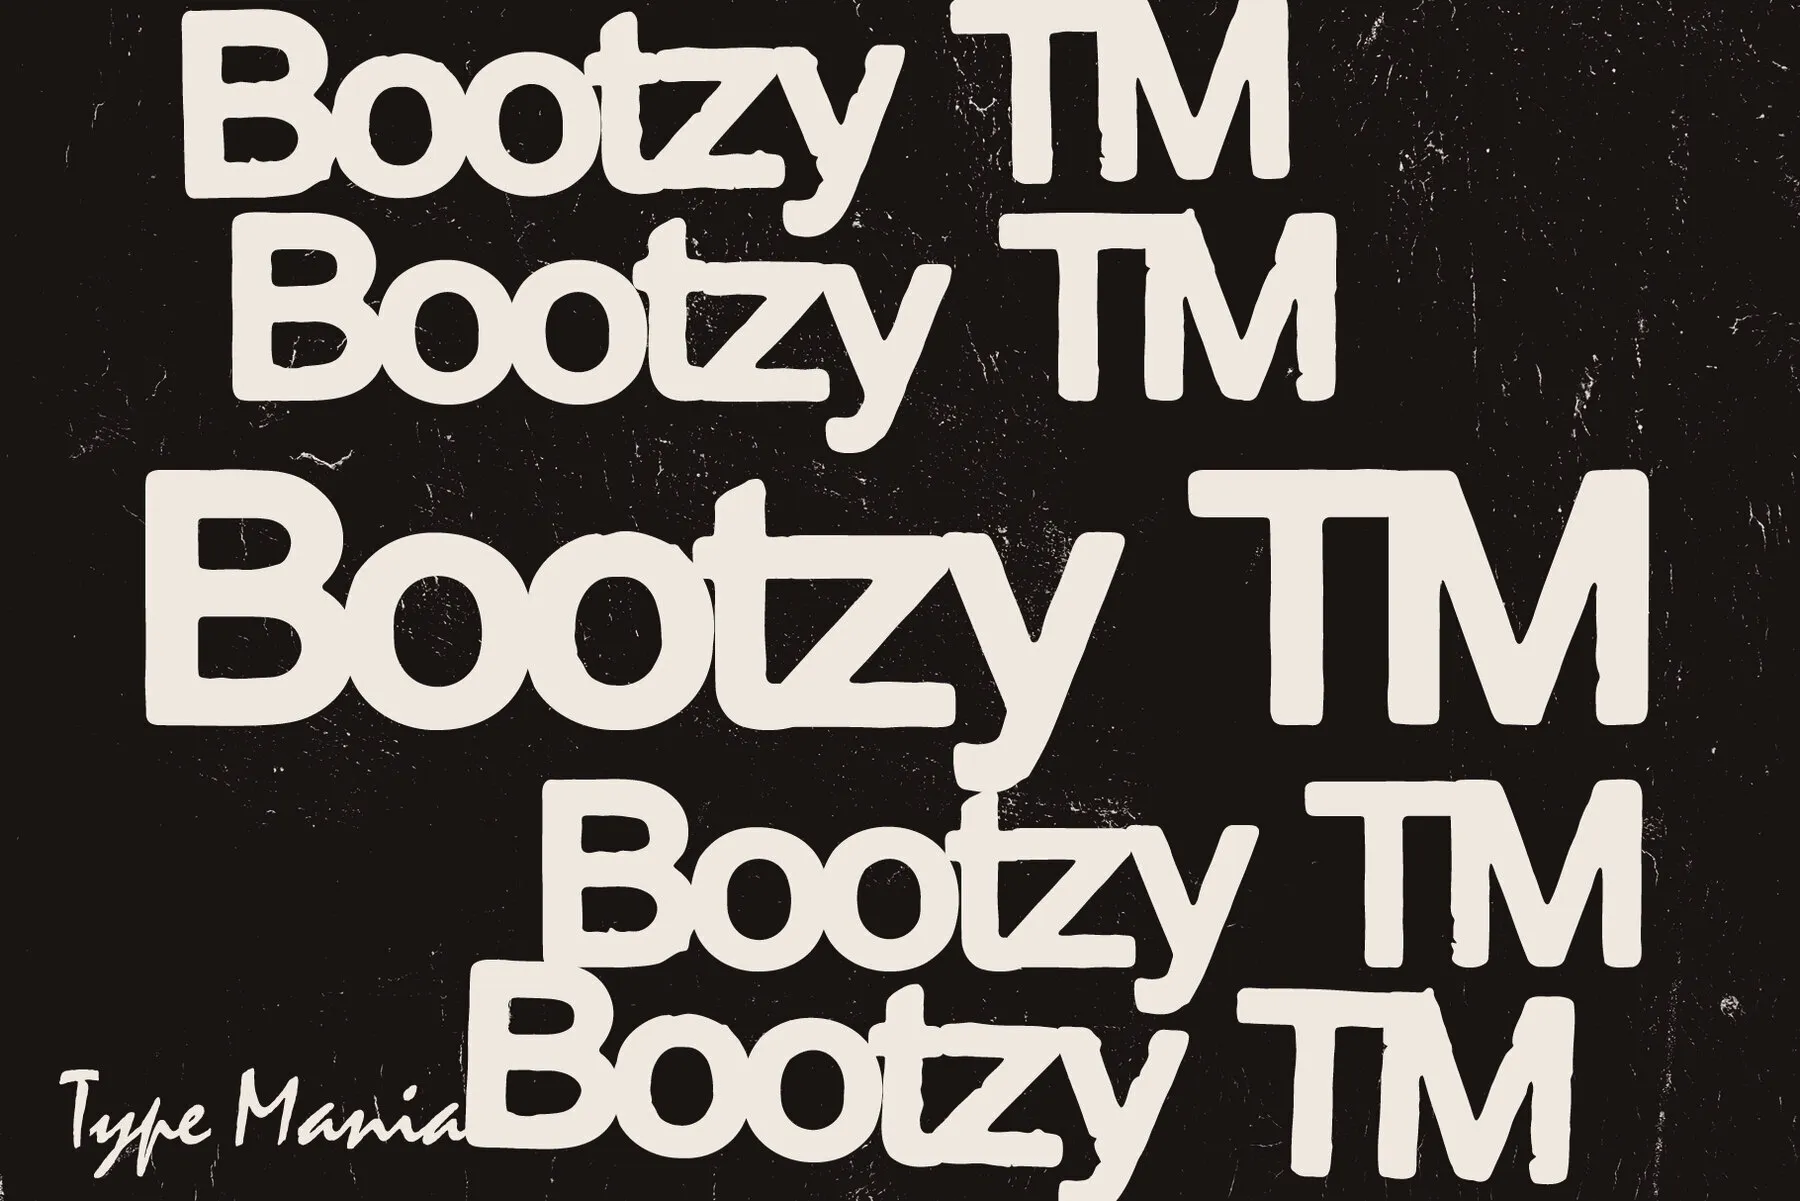 Bootzy TM